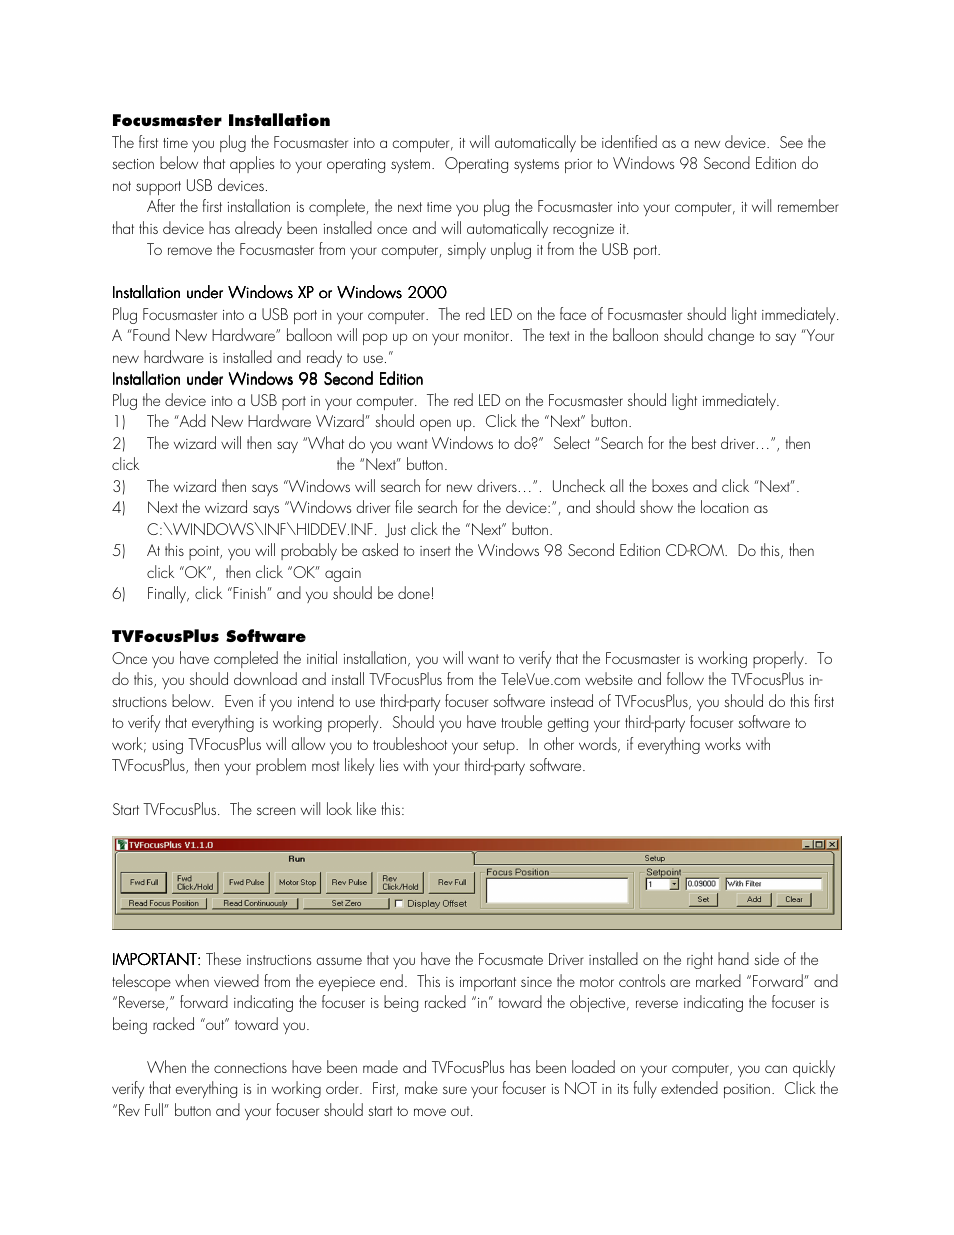 Tele Vue Focusmaster User Manual | Page 3 / 6